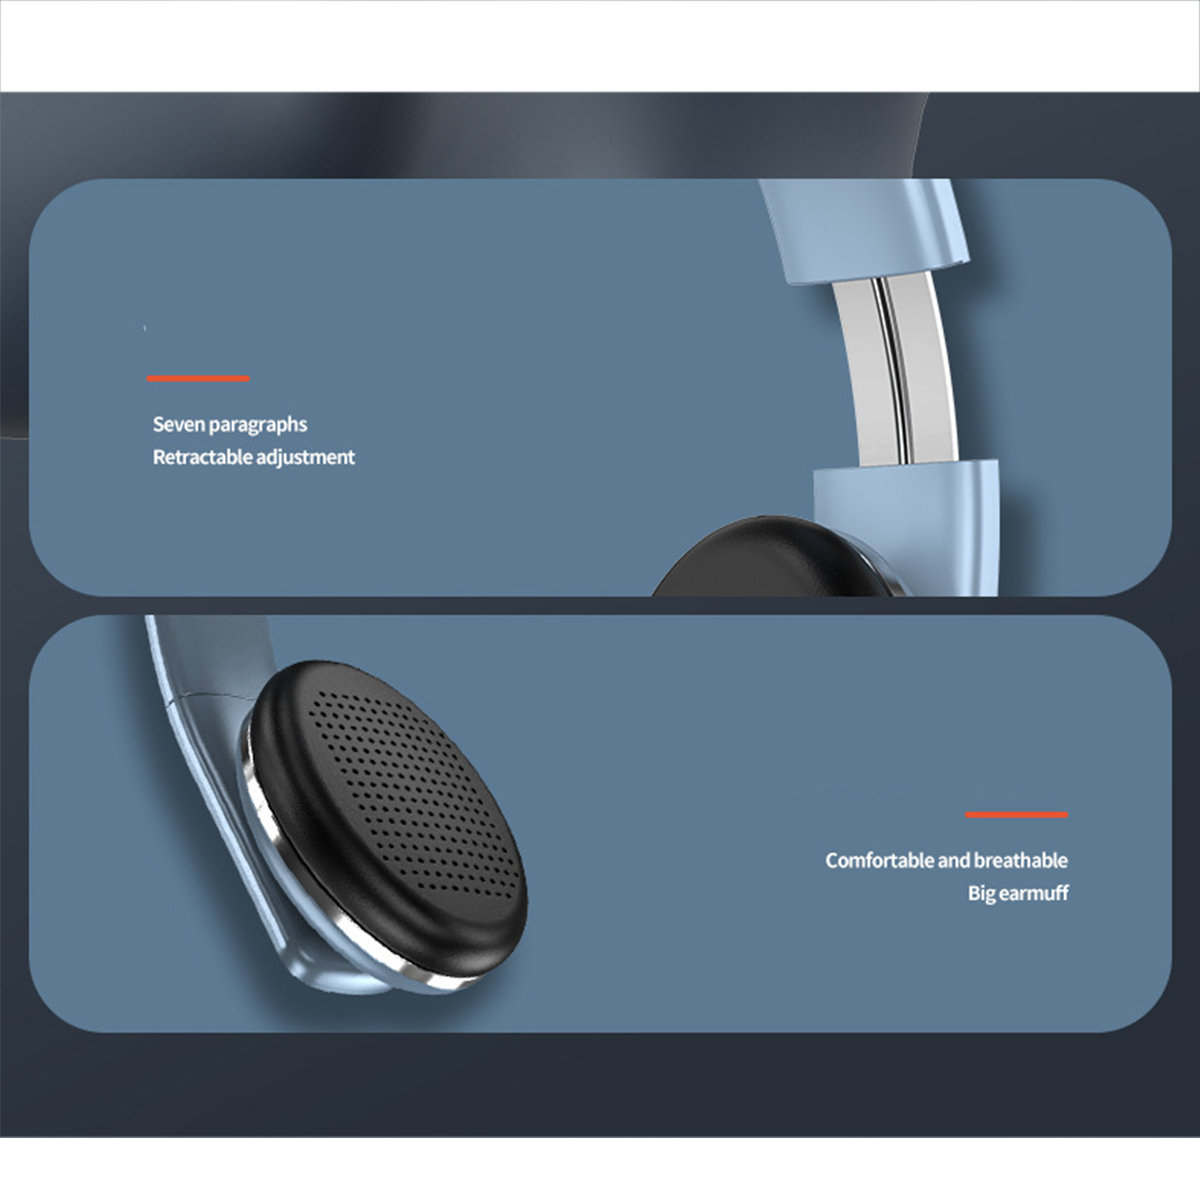 Akkulaufzeit BRIGHTAKE & Over-ear Blau Drahtloses Hochwertiger Kopfhörer 5.0, Bluetooth Gaming-Headset: Klang, Lange